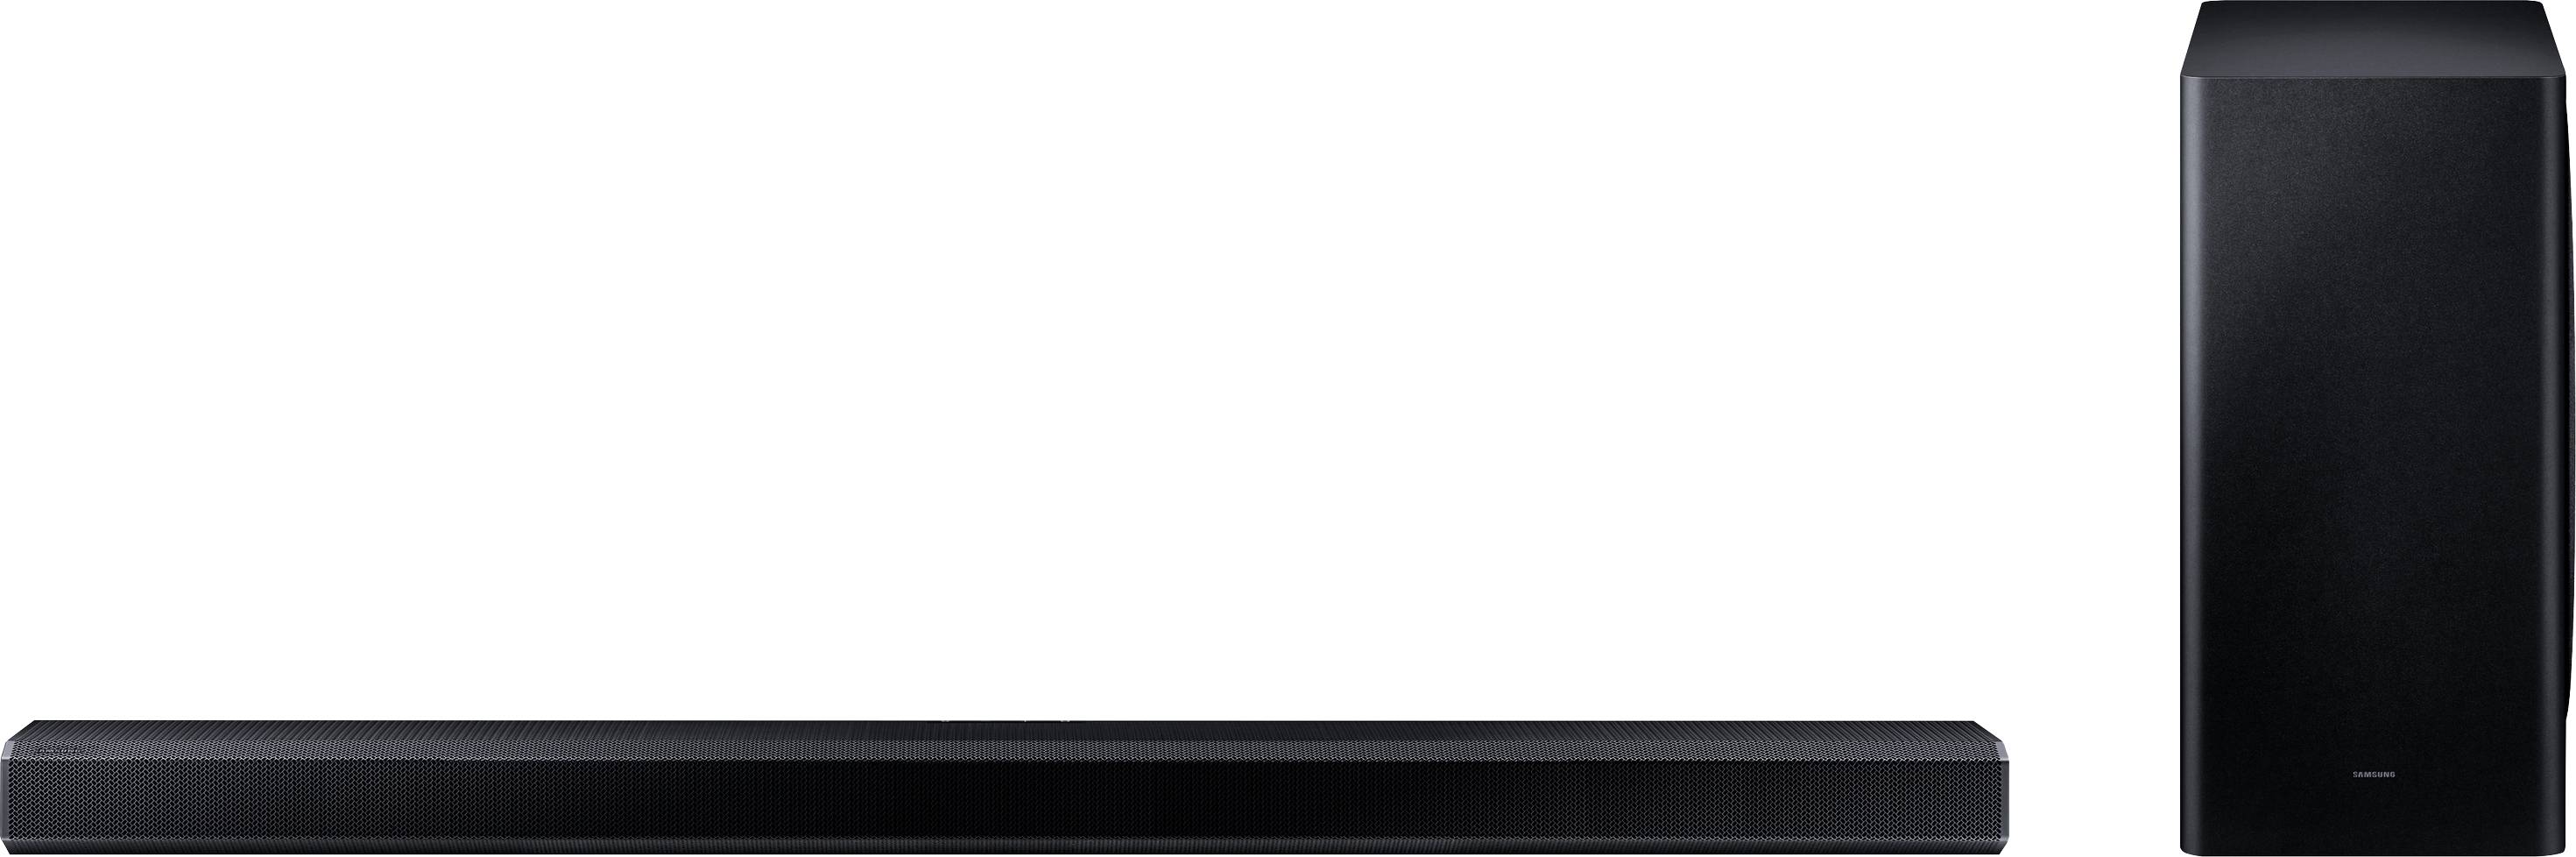 inhoud idee Geavanceerd Samsung HW-Q700A Soundbar Zwart Dolby Atmos, Incl. draadloze subwoofer,  Bluetooth, USB | Conrad.nl